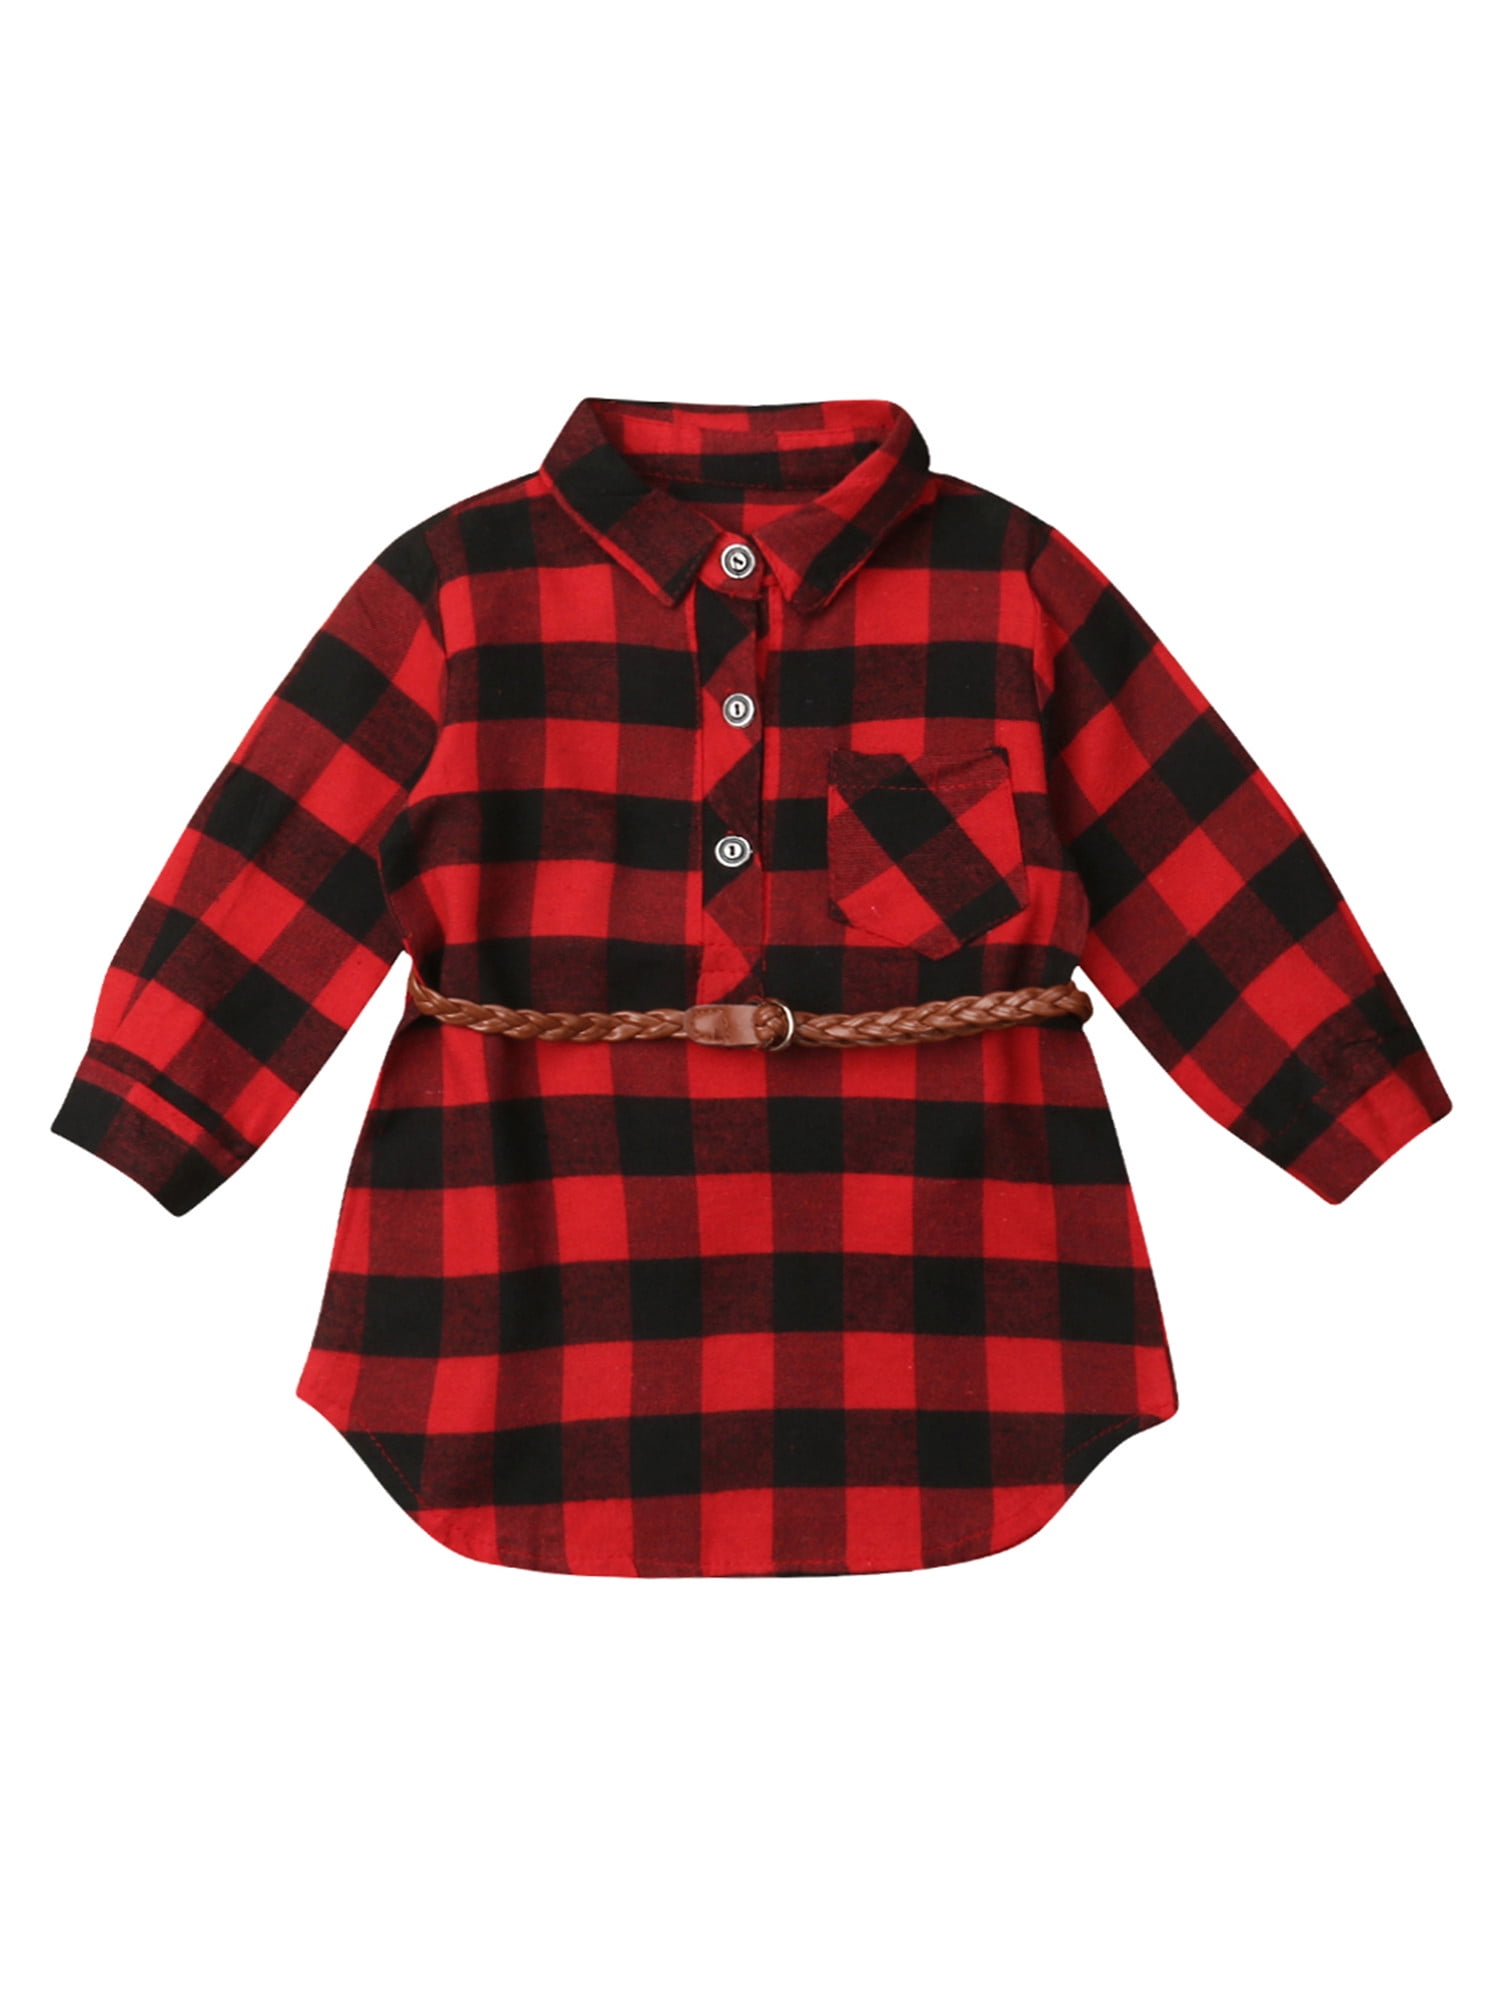 Arshiner Toddler Boys Girls Long Sleeve Plaid Shirt Button-Down Flannel T-Shirt Kids Tops 2t-7t 